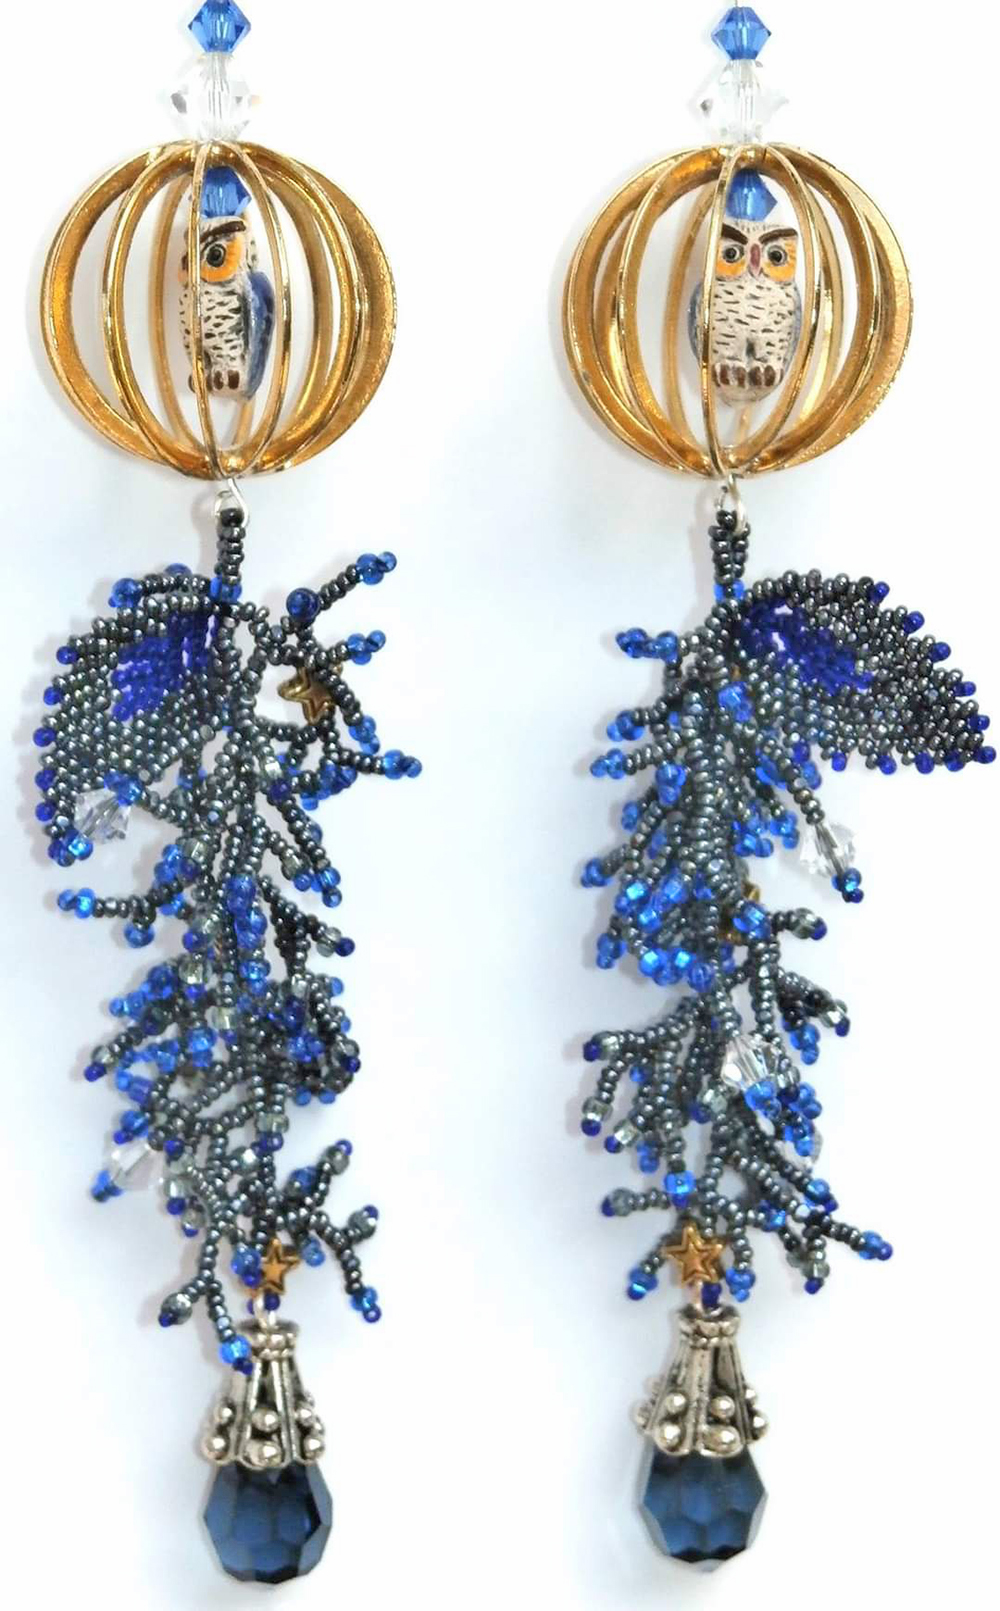 "Harry Potter" inspired jewelry by Tatiana Van Iten